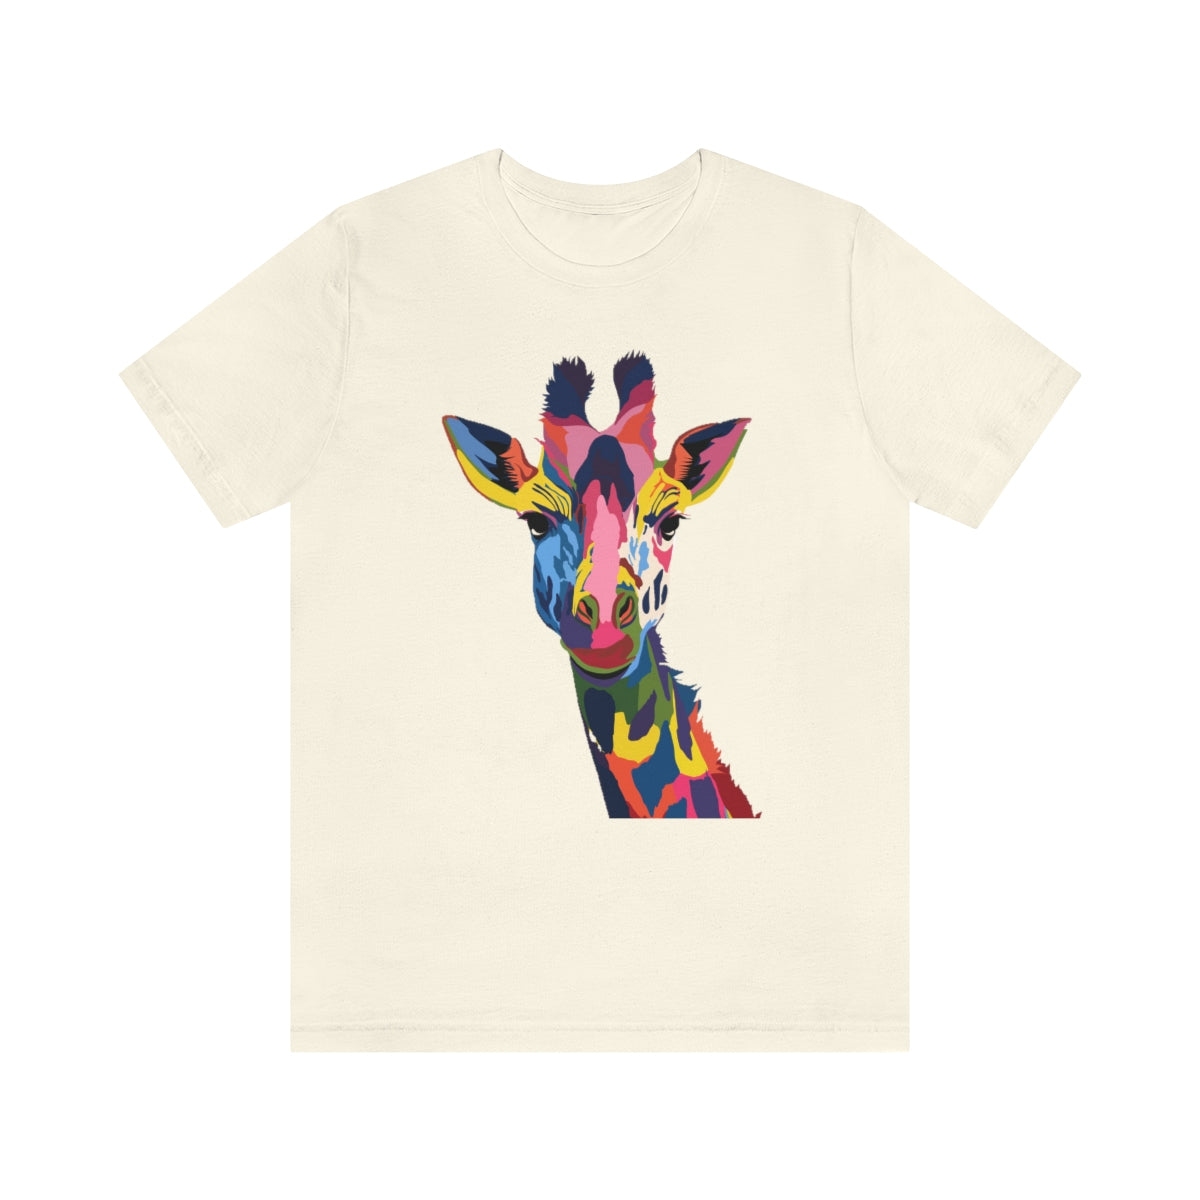 Unisex Jersey Short Sleeve Tee "Watercolor Colorful Giraffe"